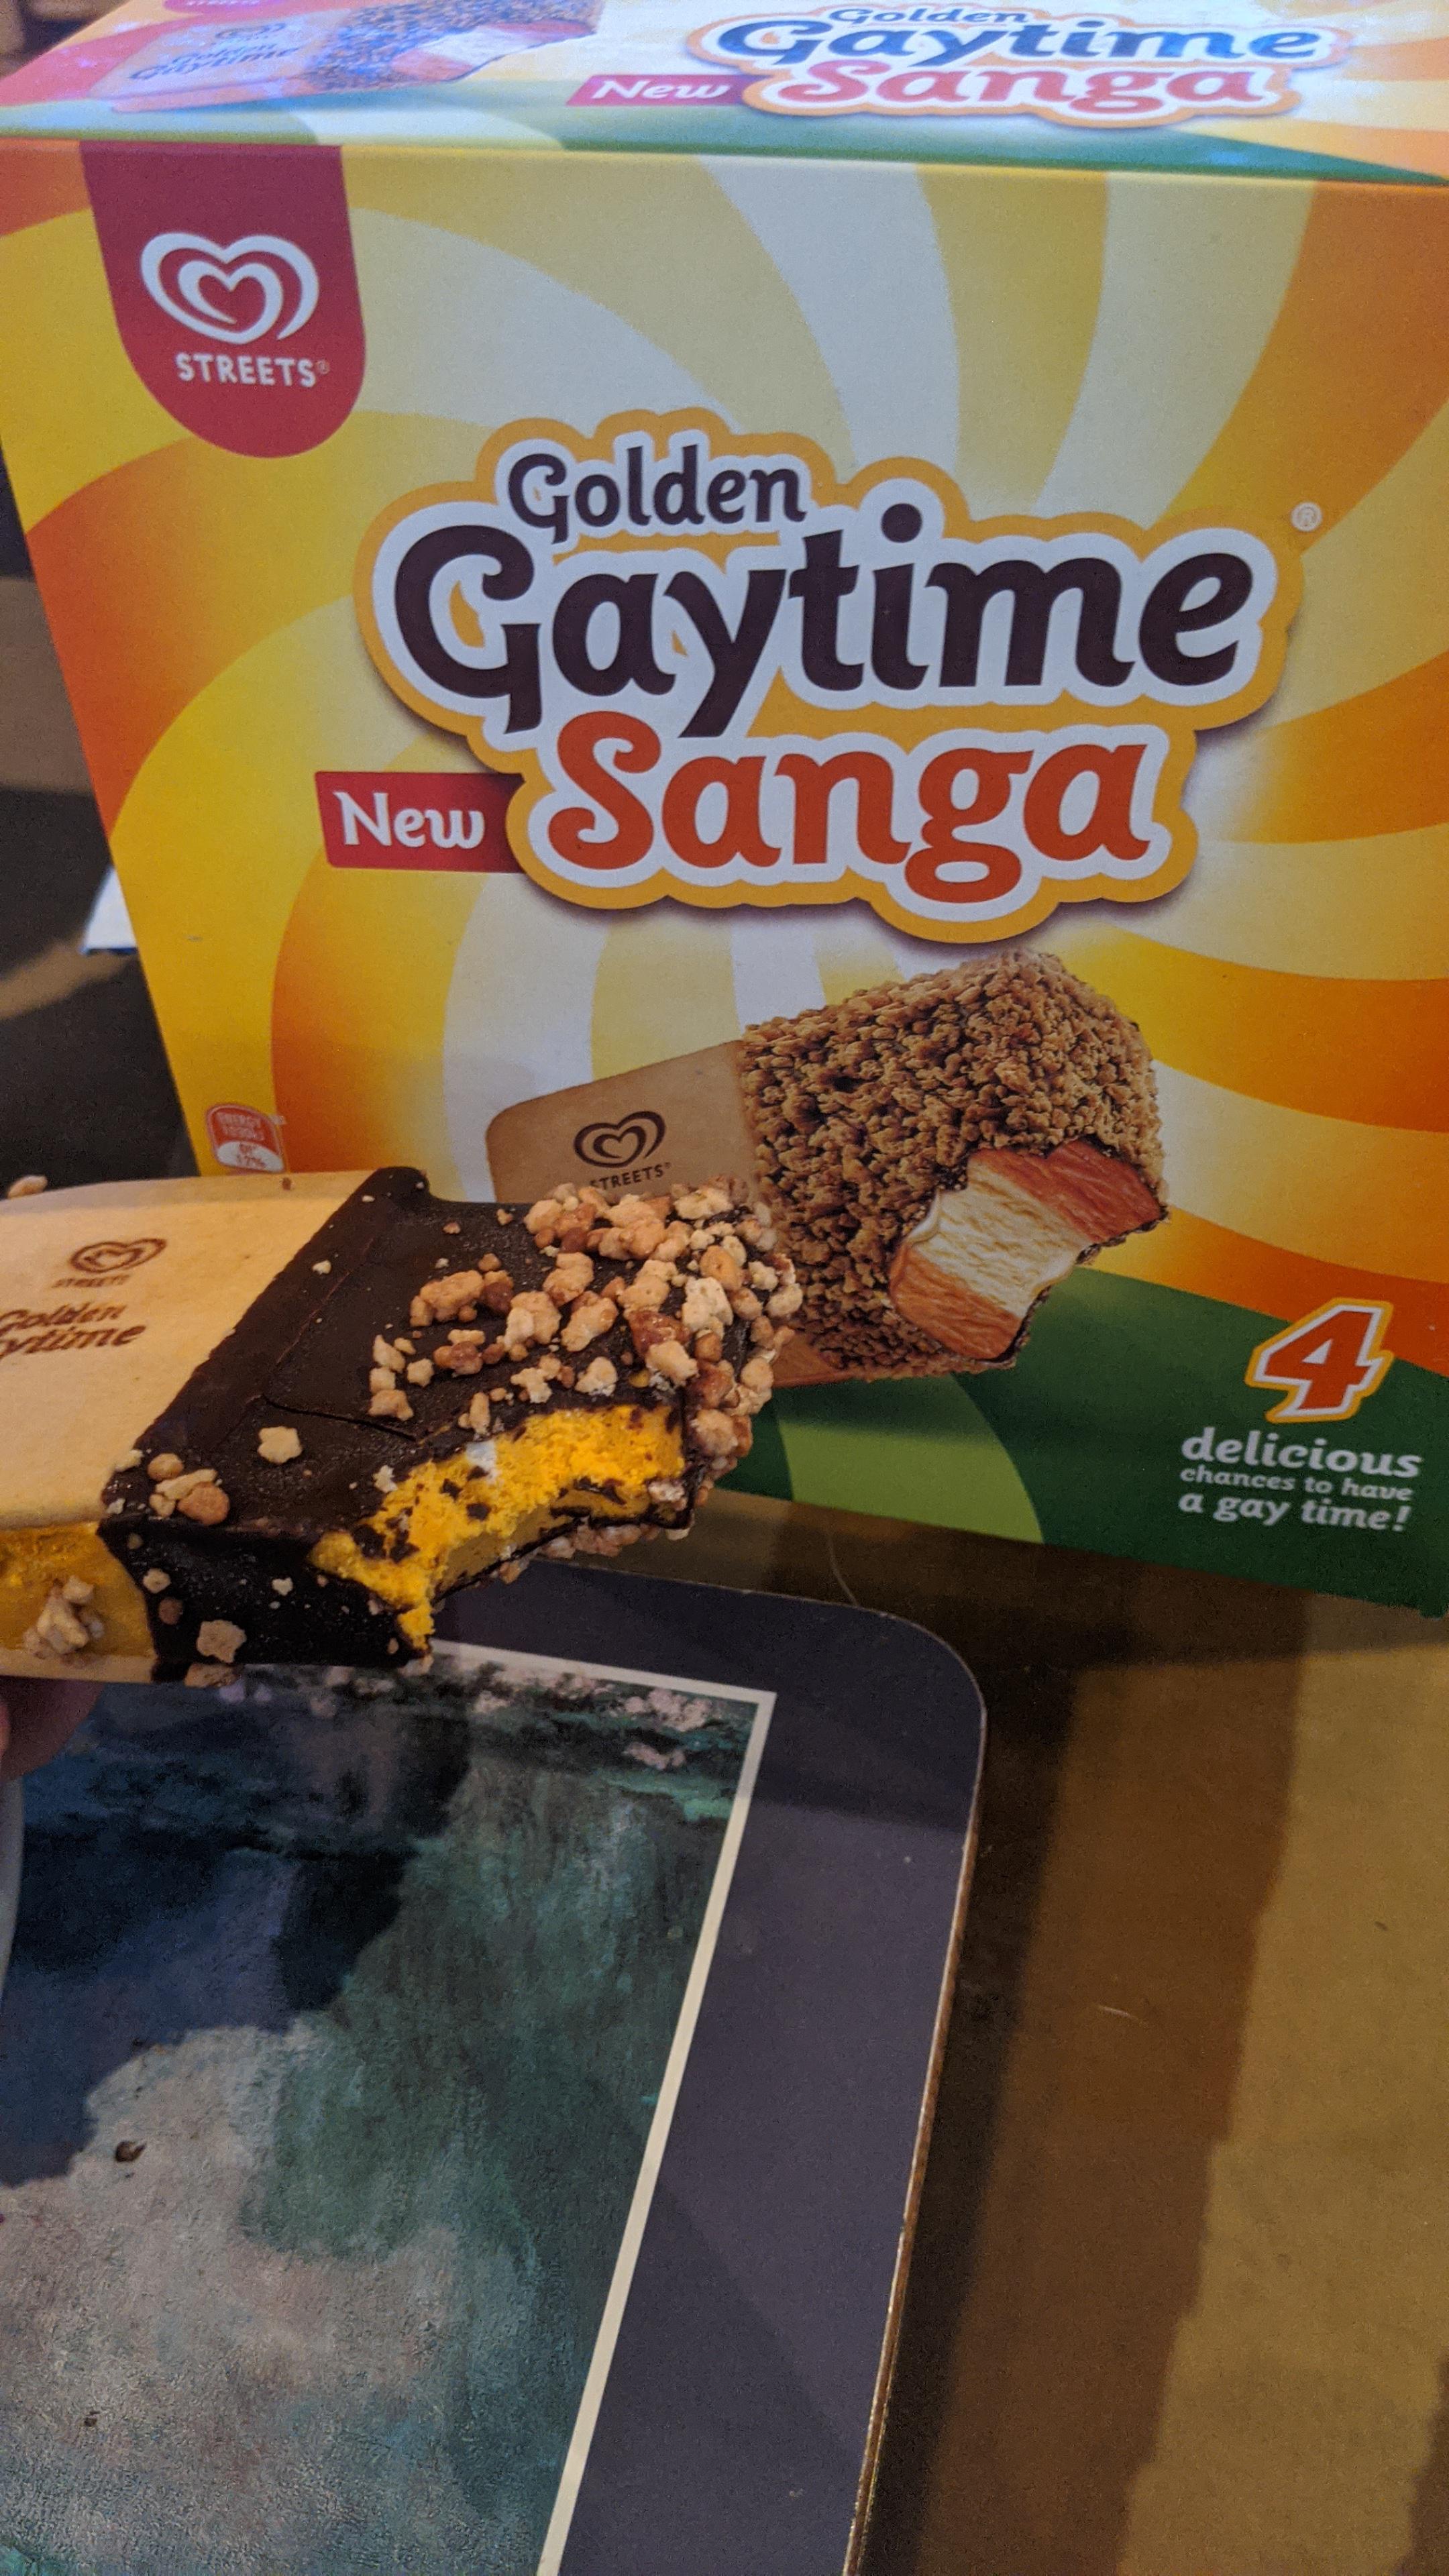 snack - Stress Golden Gaytime New Sanga 4 delicious gaye